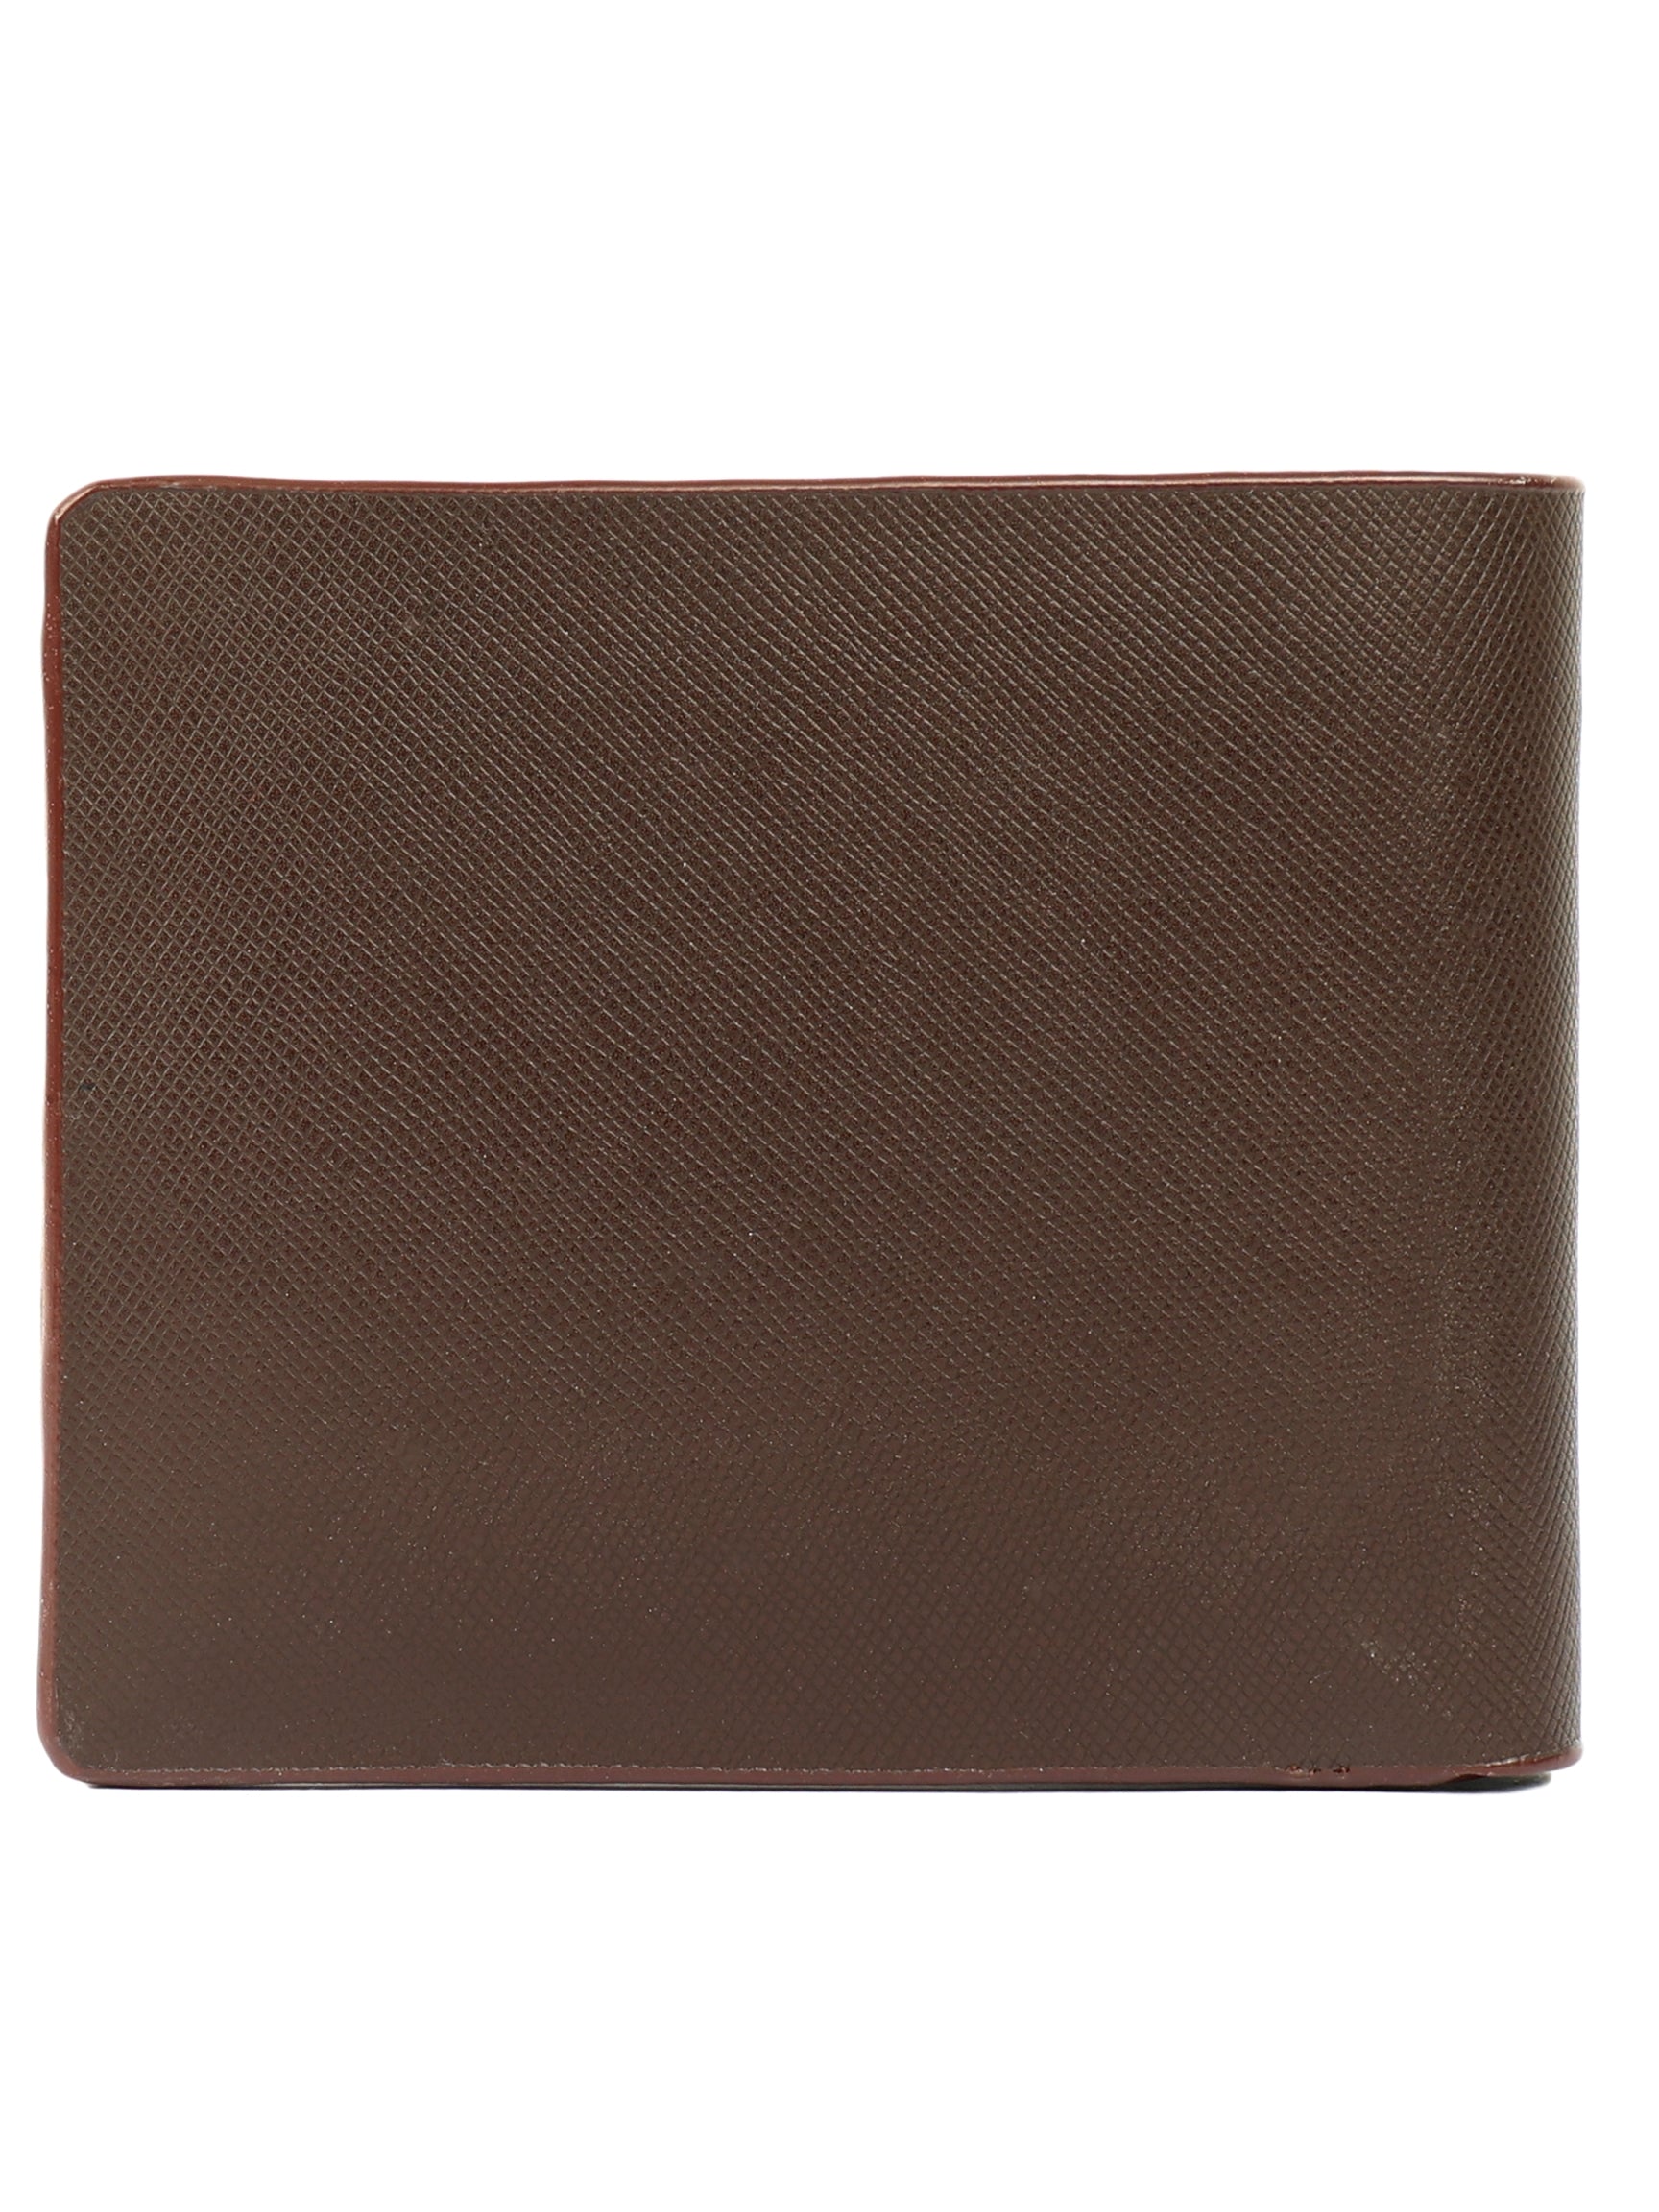 SKAGEN Tote Brown Color Leather Tote Shoulder Purse Handbag | eBay